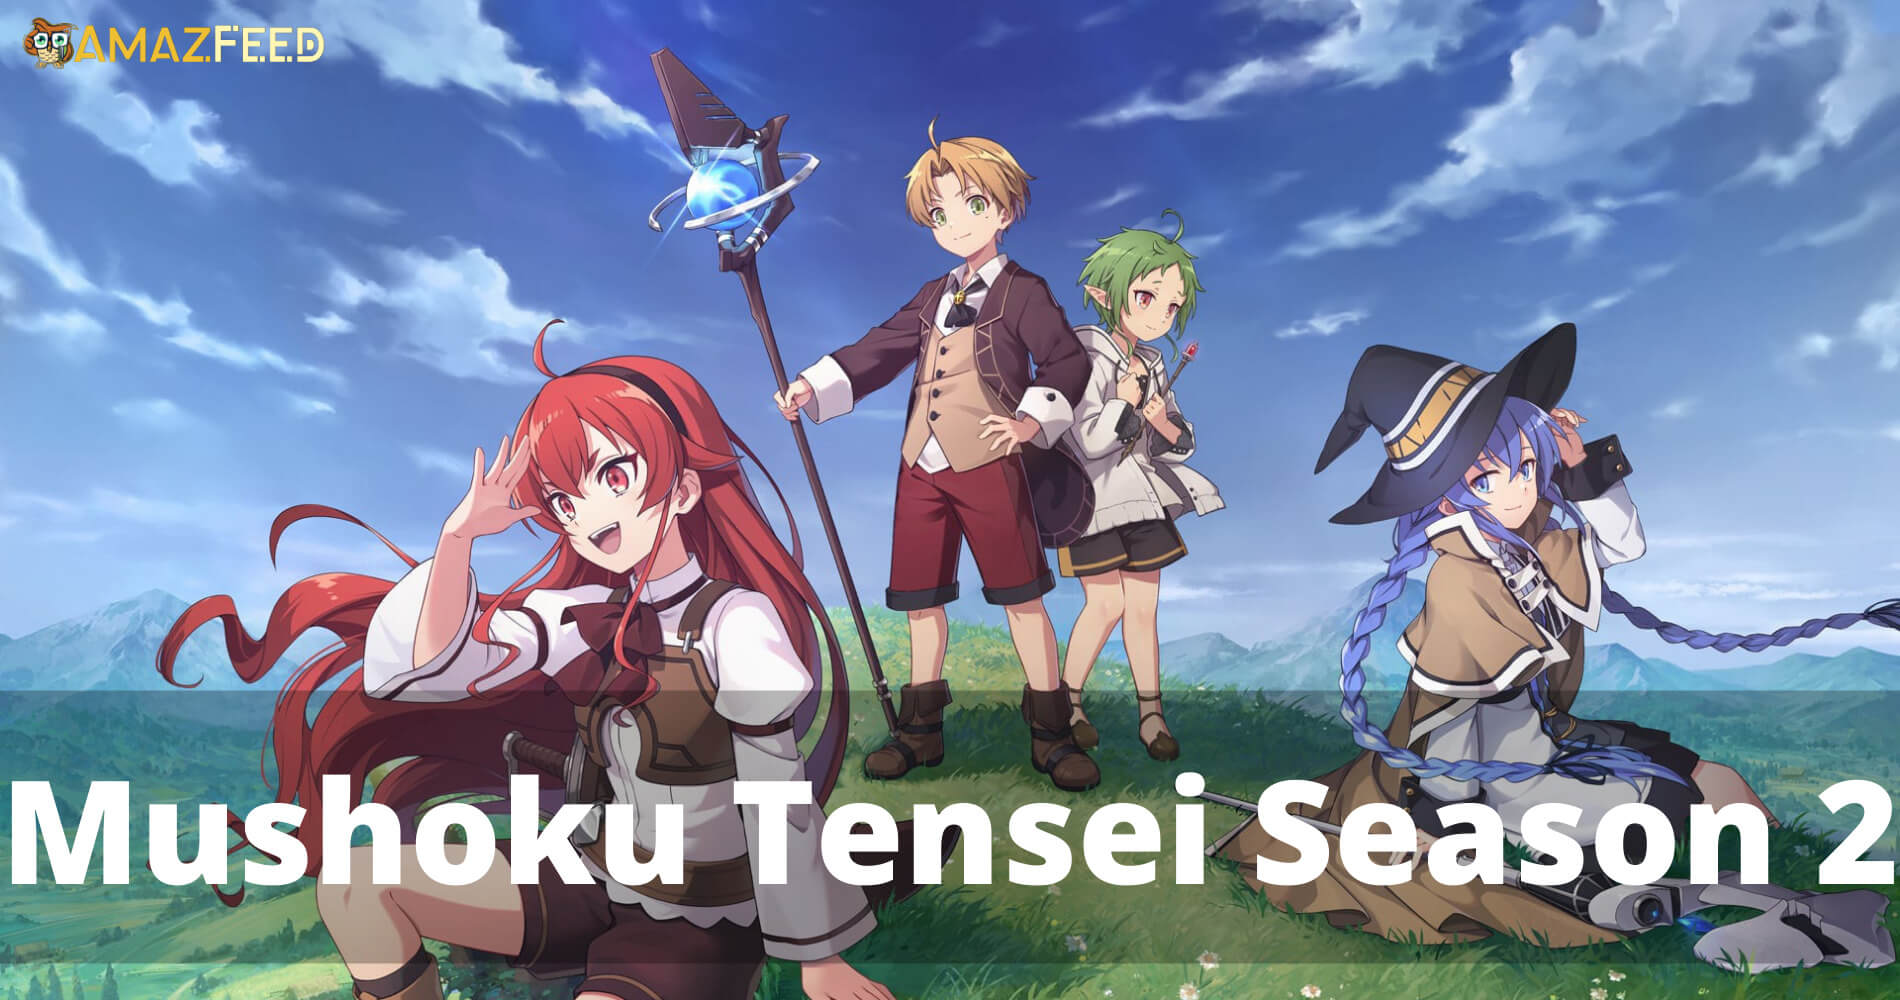 Will there be any update on Mushoku Tensei Season 2 Trailer